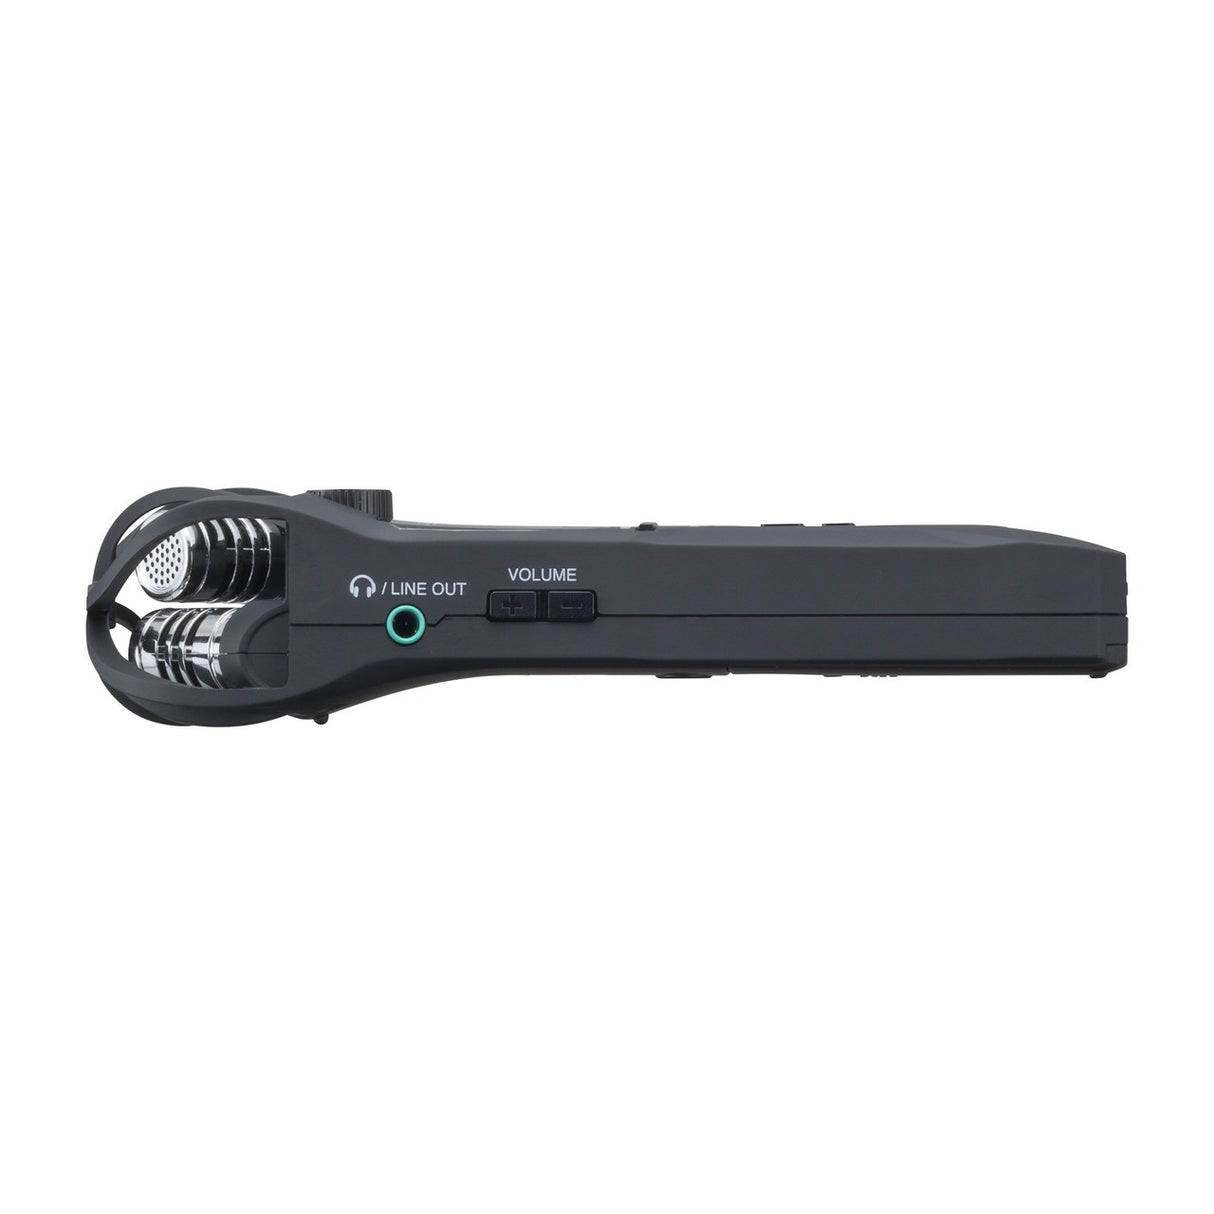 Zoom H1n | Portable 24 Bit Stereo X/Y Microphone Digital Handy Recorder